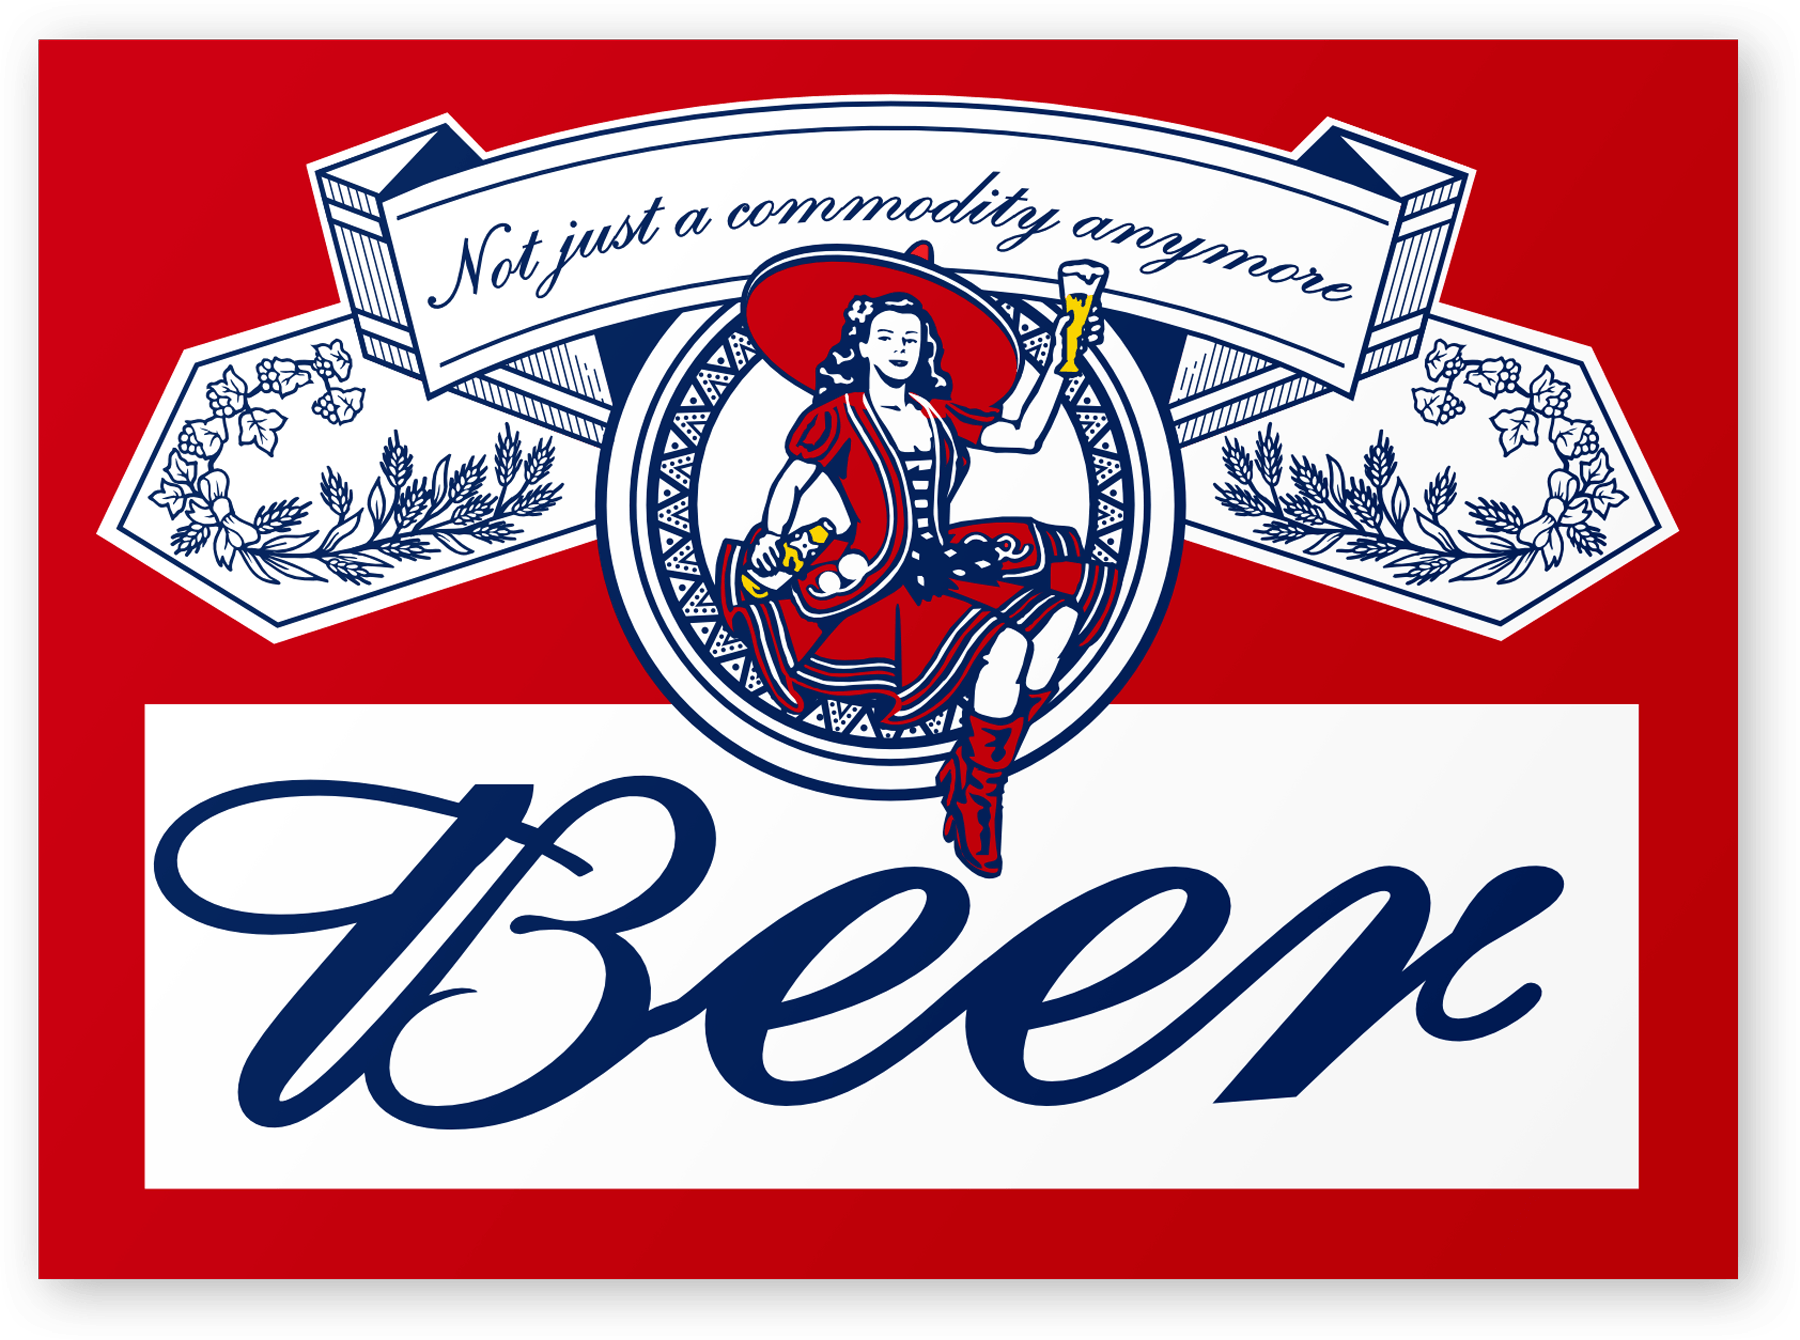 Popular Beer Logo - The Beer Revolution